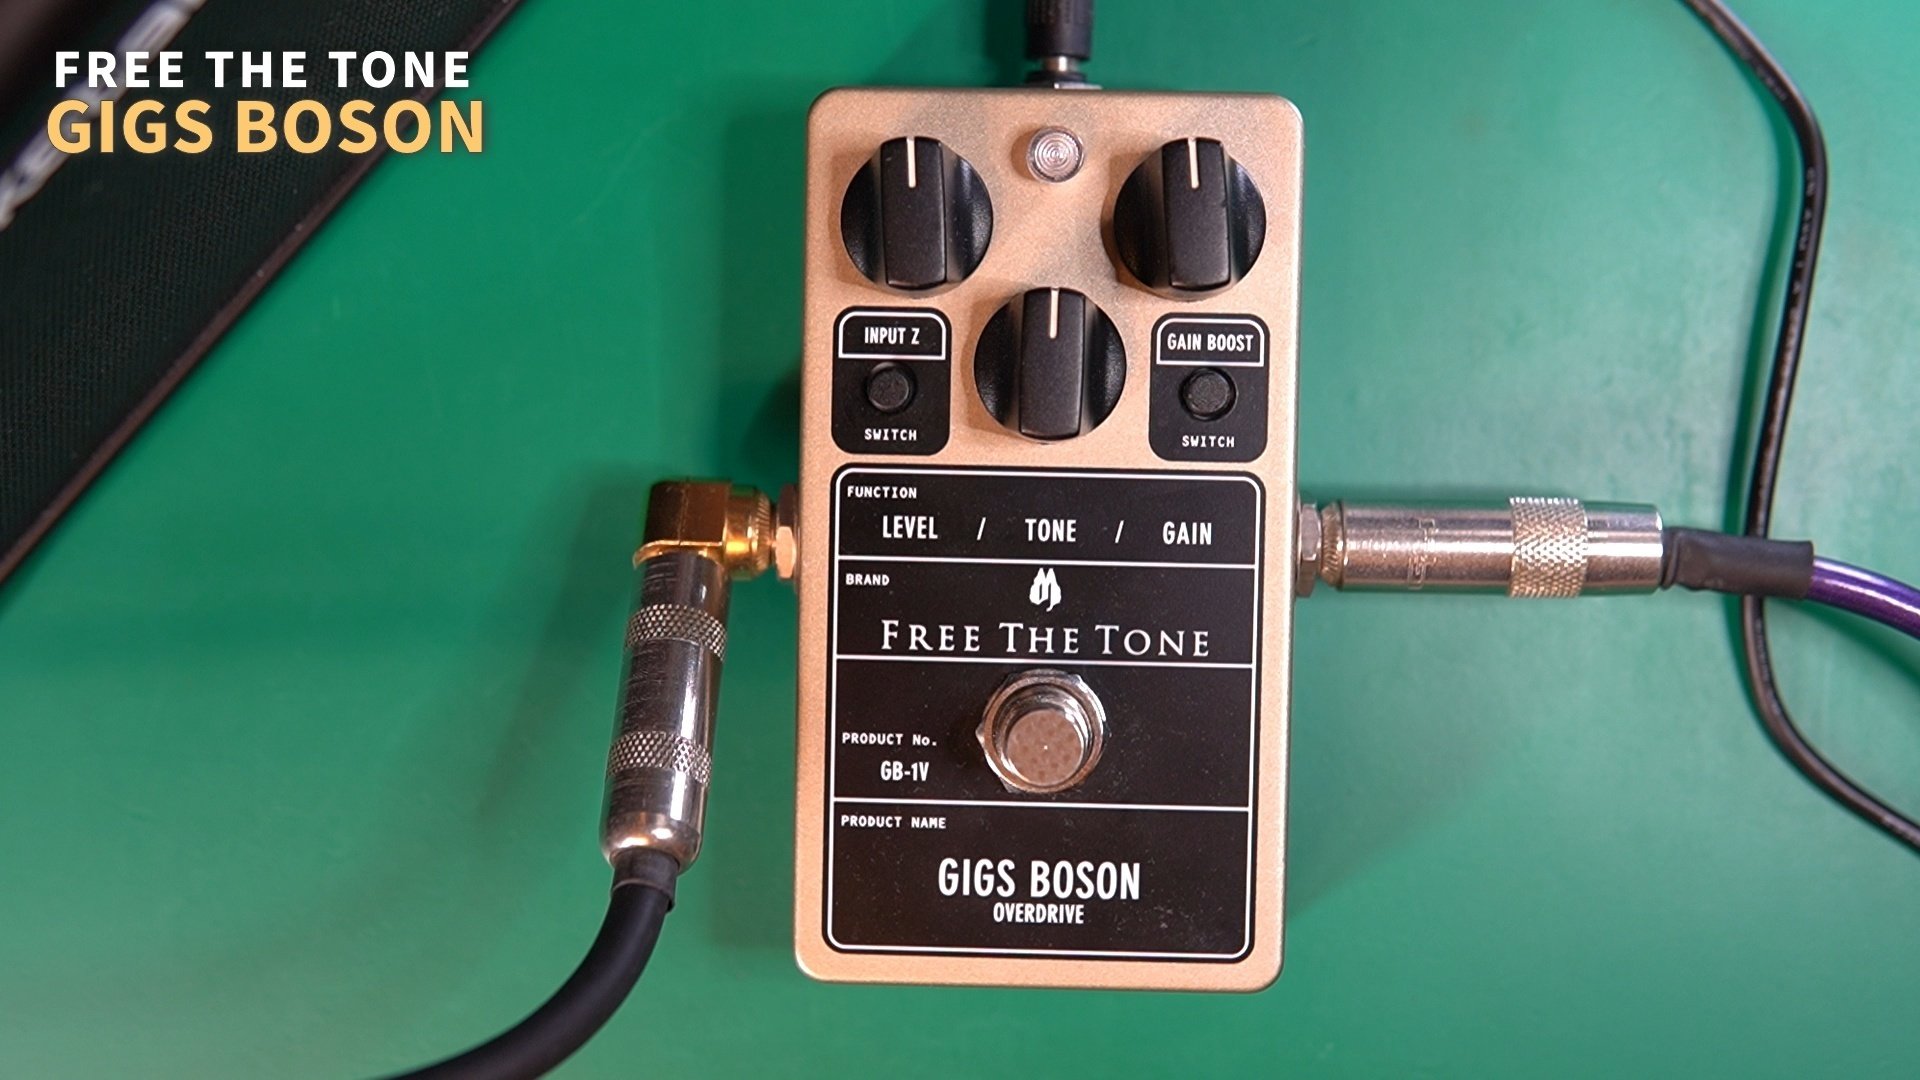 Free The Tone Gigs Boson GB-1V エフェクター www.krzysztofbialy.com